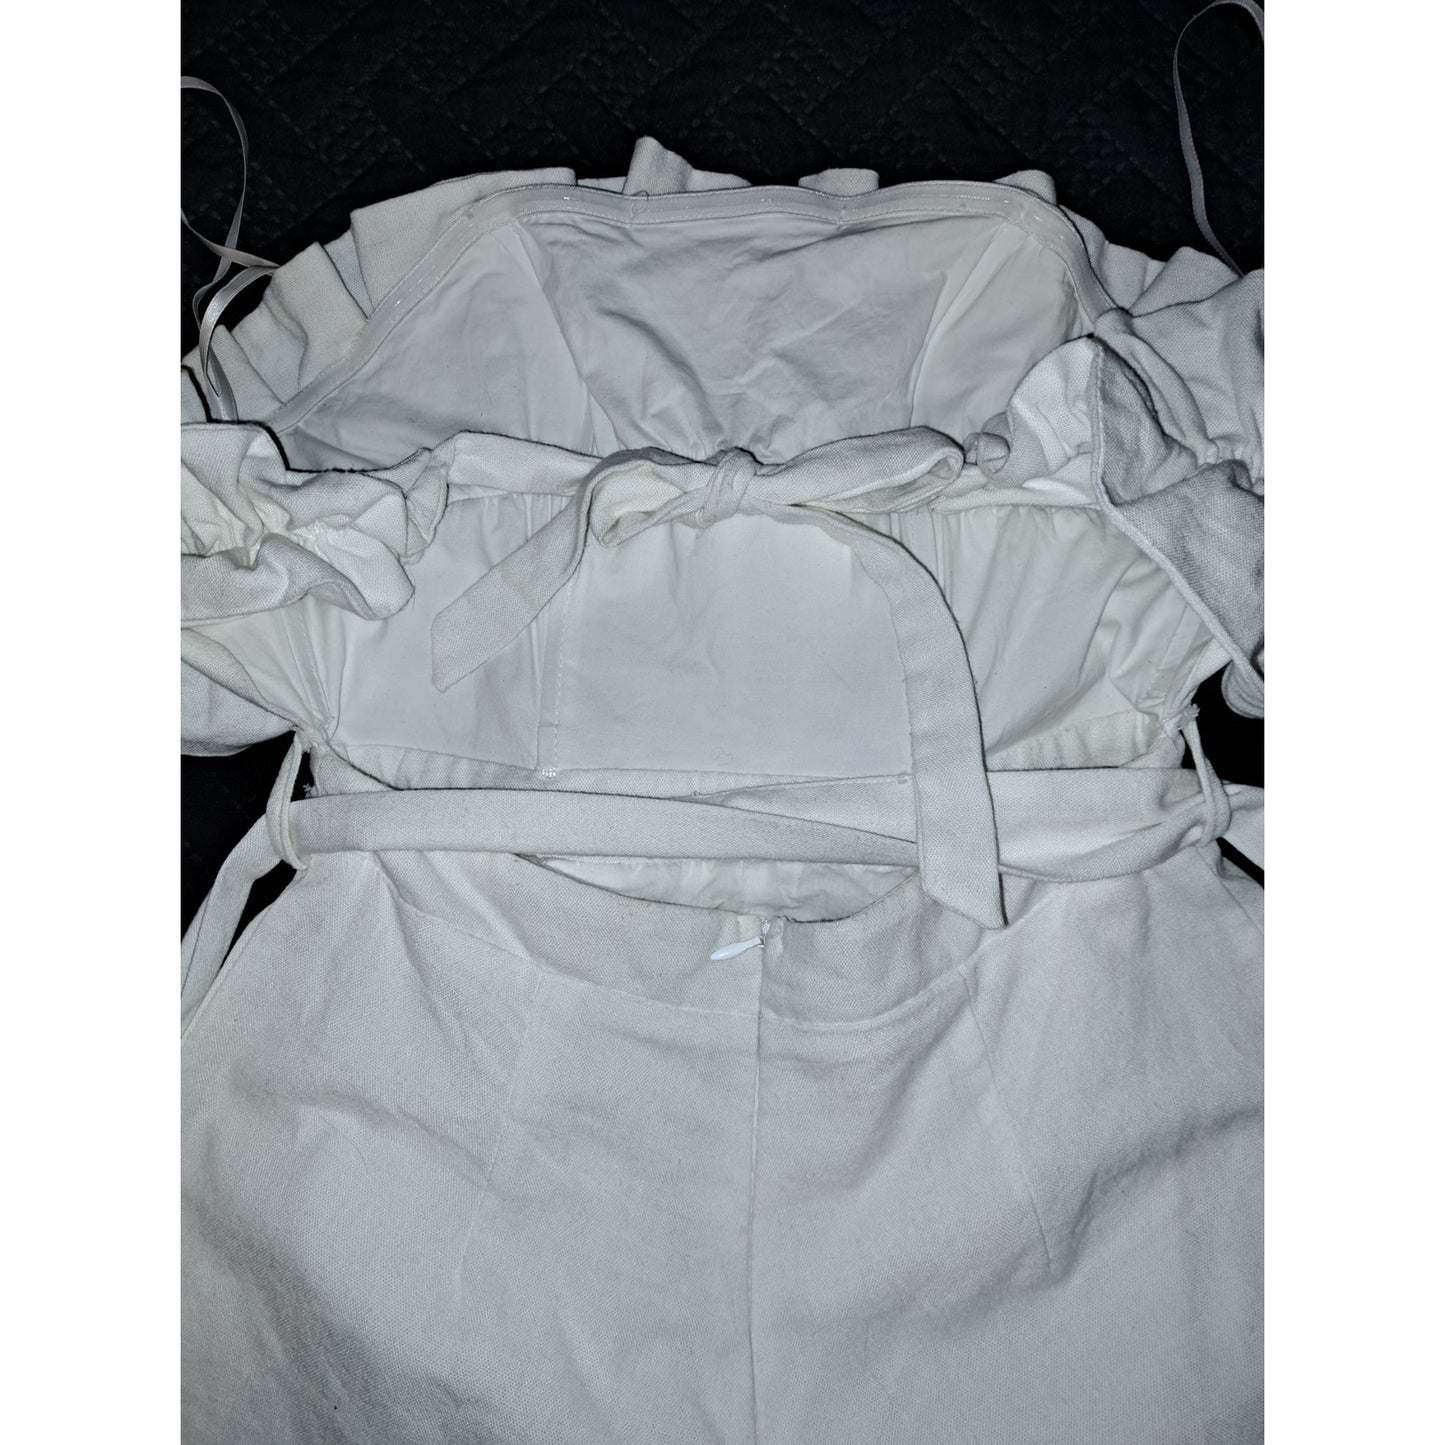 Boutique Saints + Secrets white linen ruffled strapless romper jumper XS-S